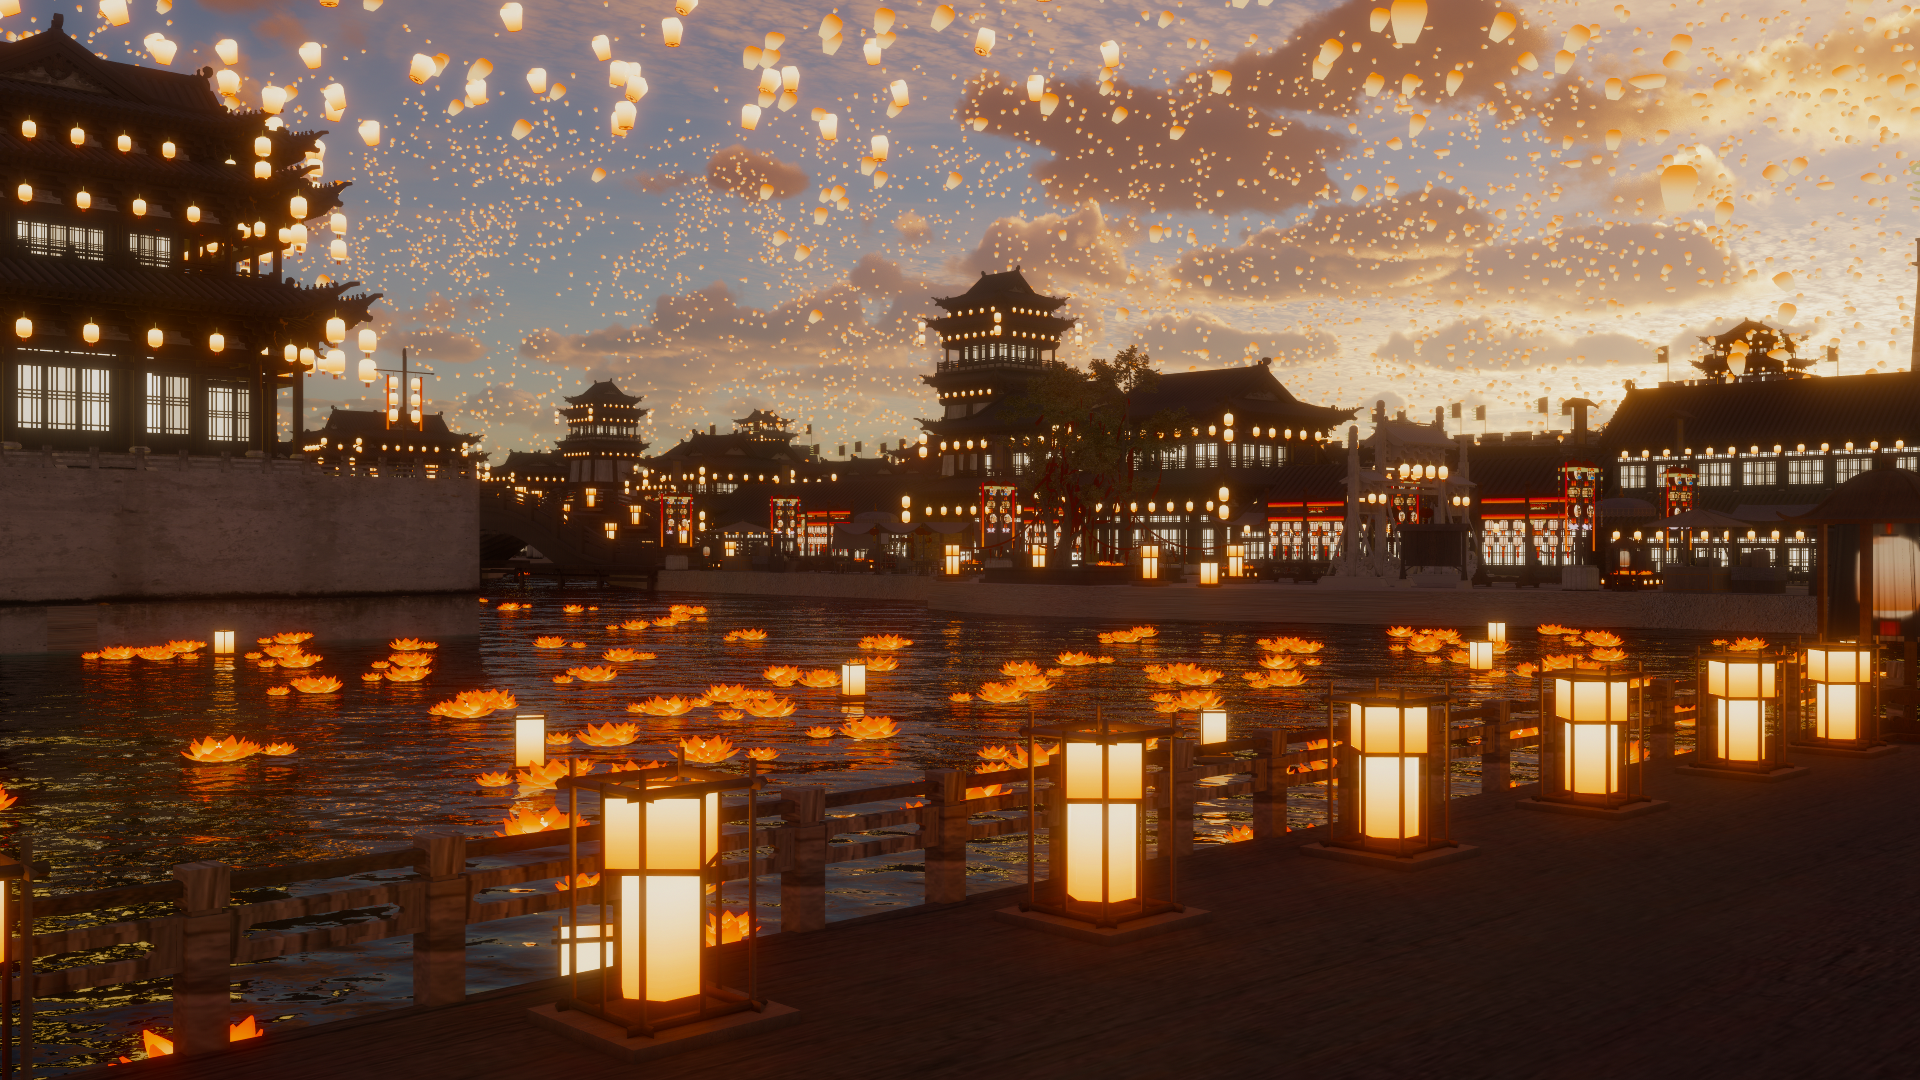 Anime Scenery Flowers Lantern Lantern Festival City Lights Clouds 1920x1080